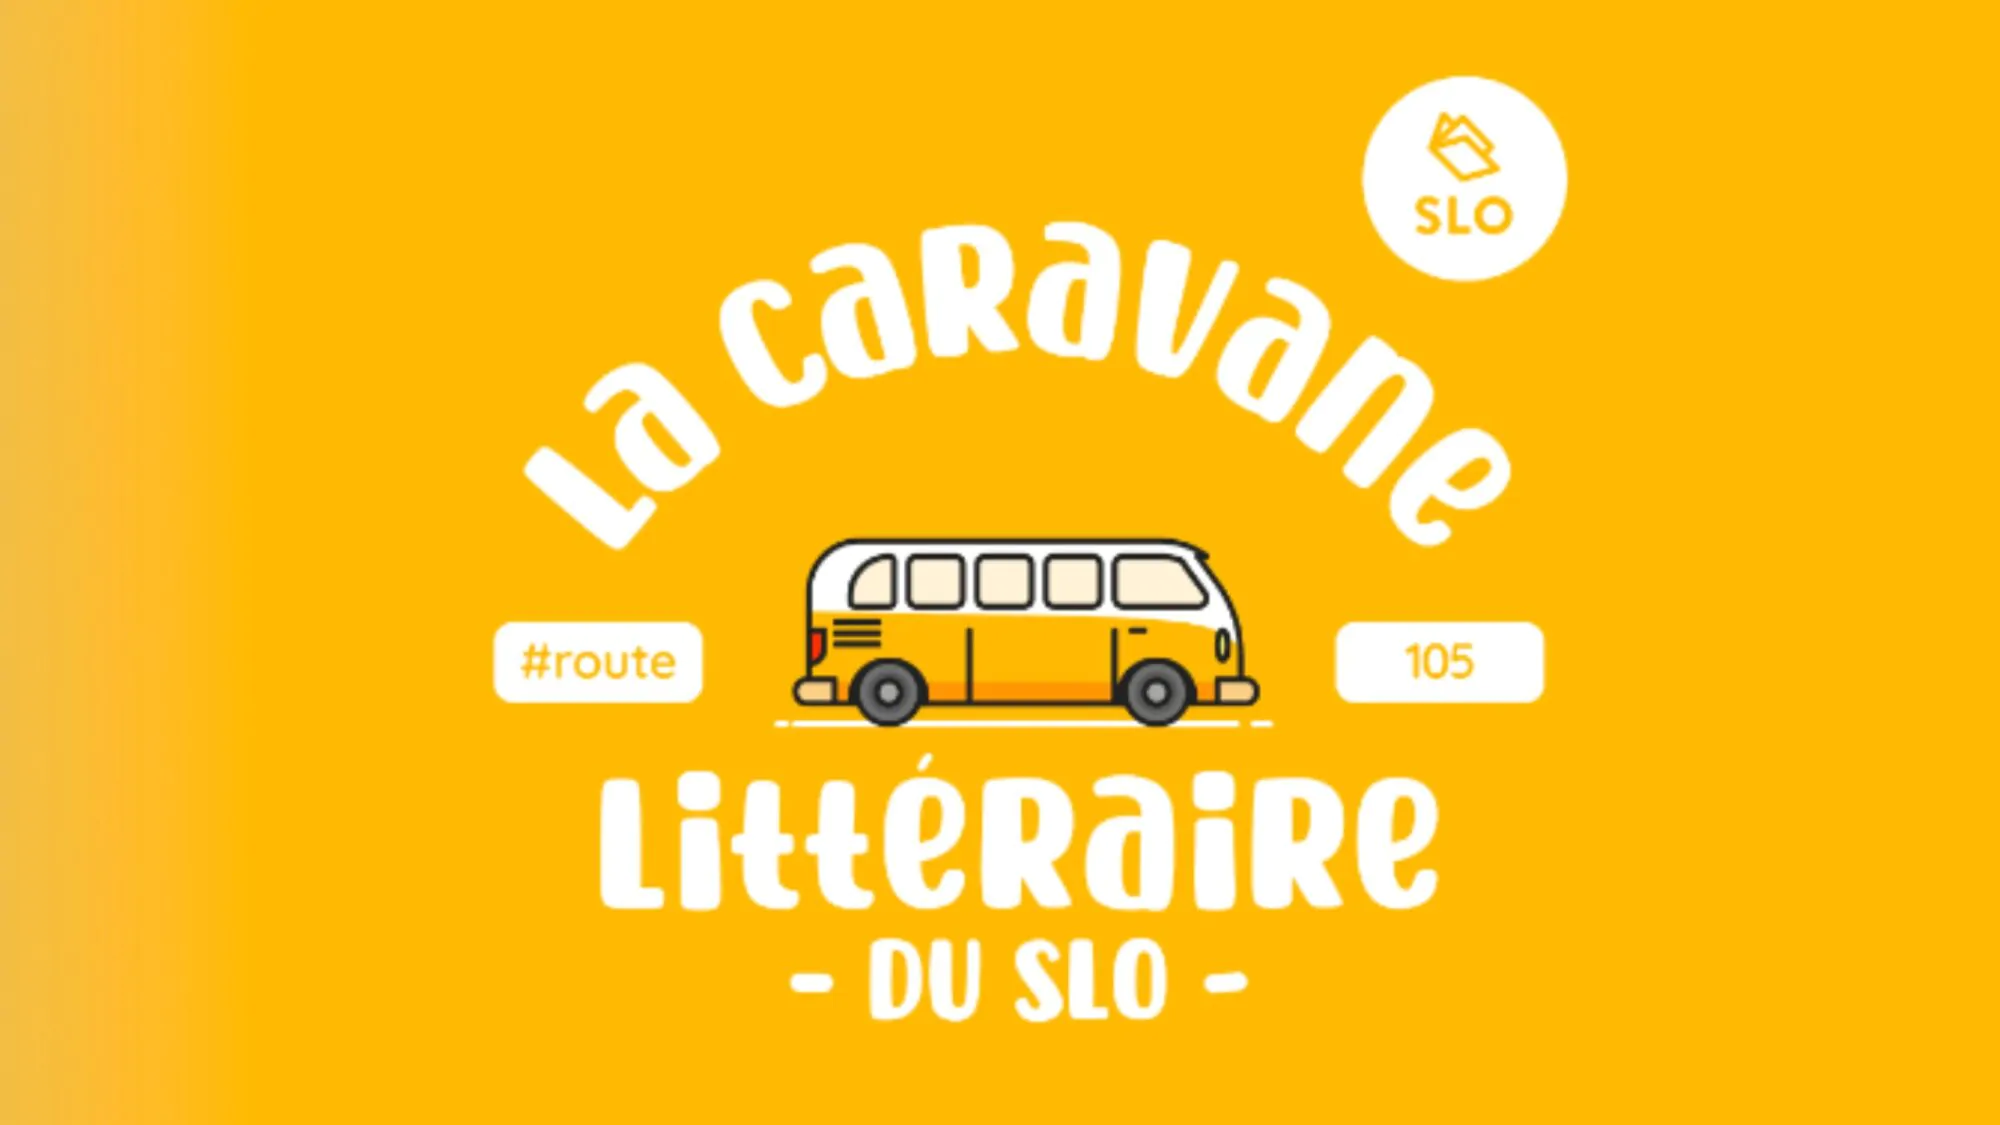 caravane-litteraire-105-slo